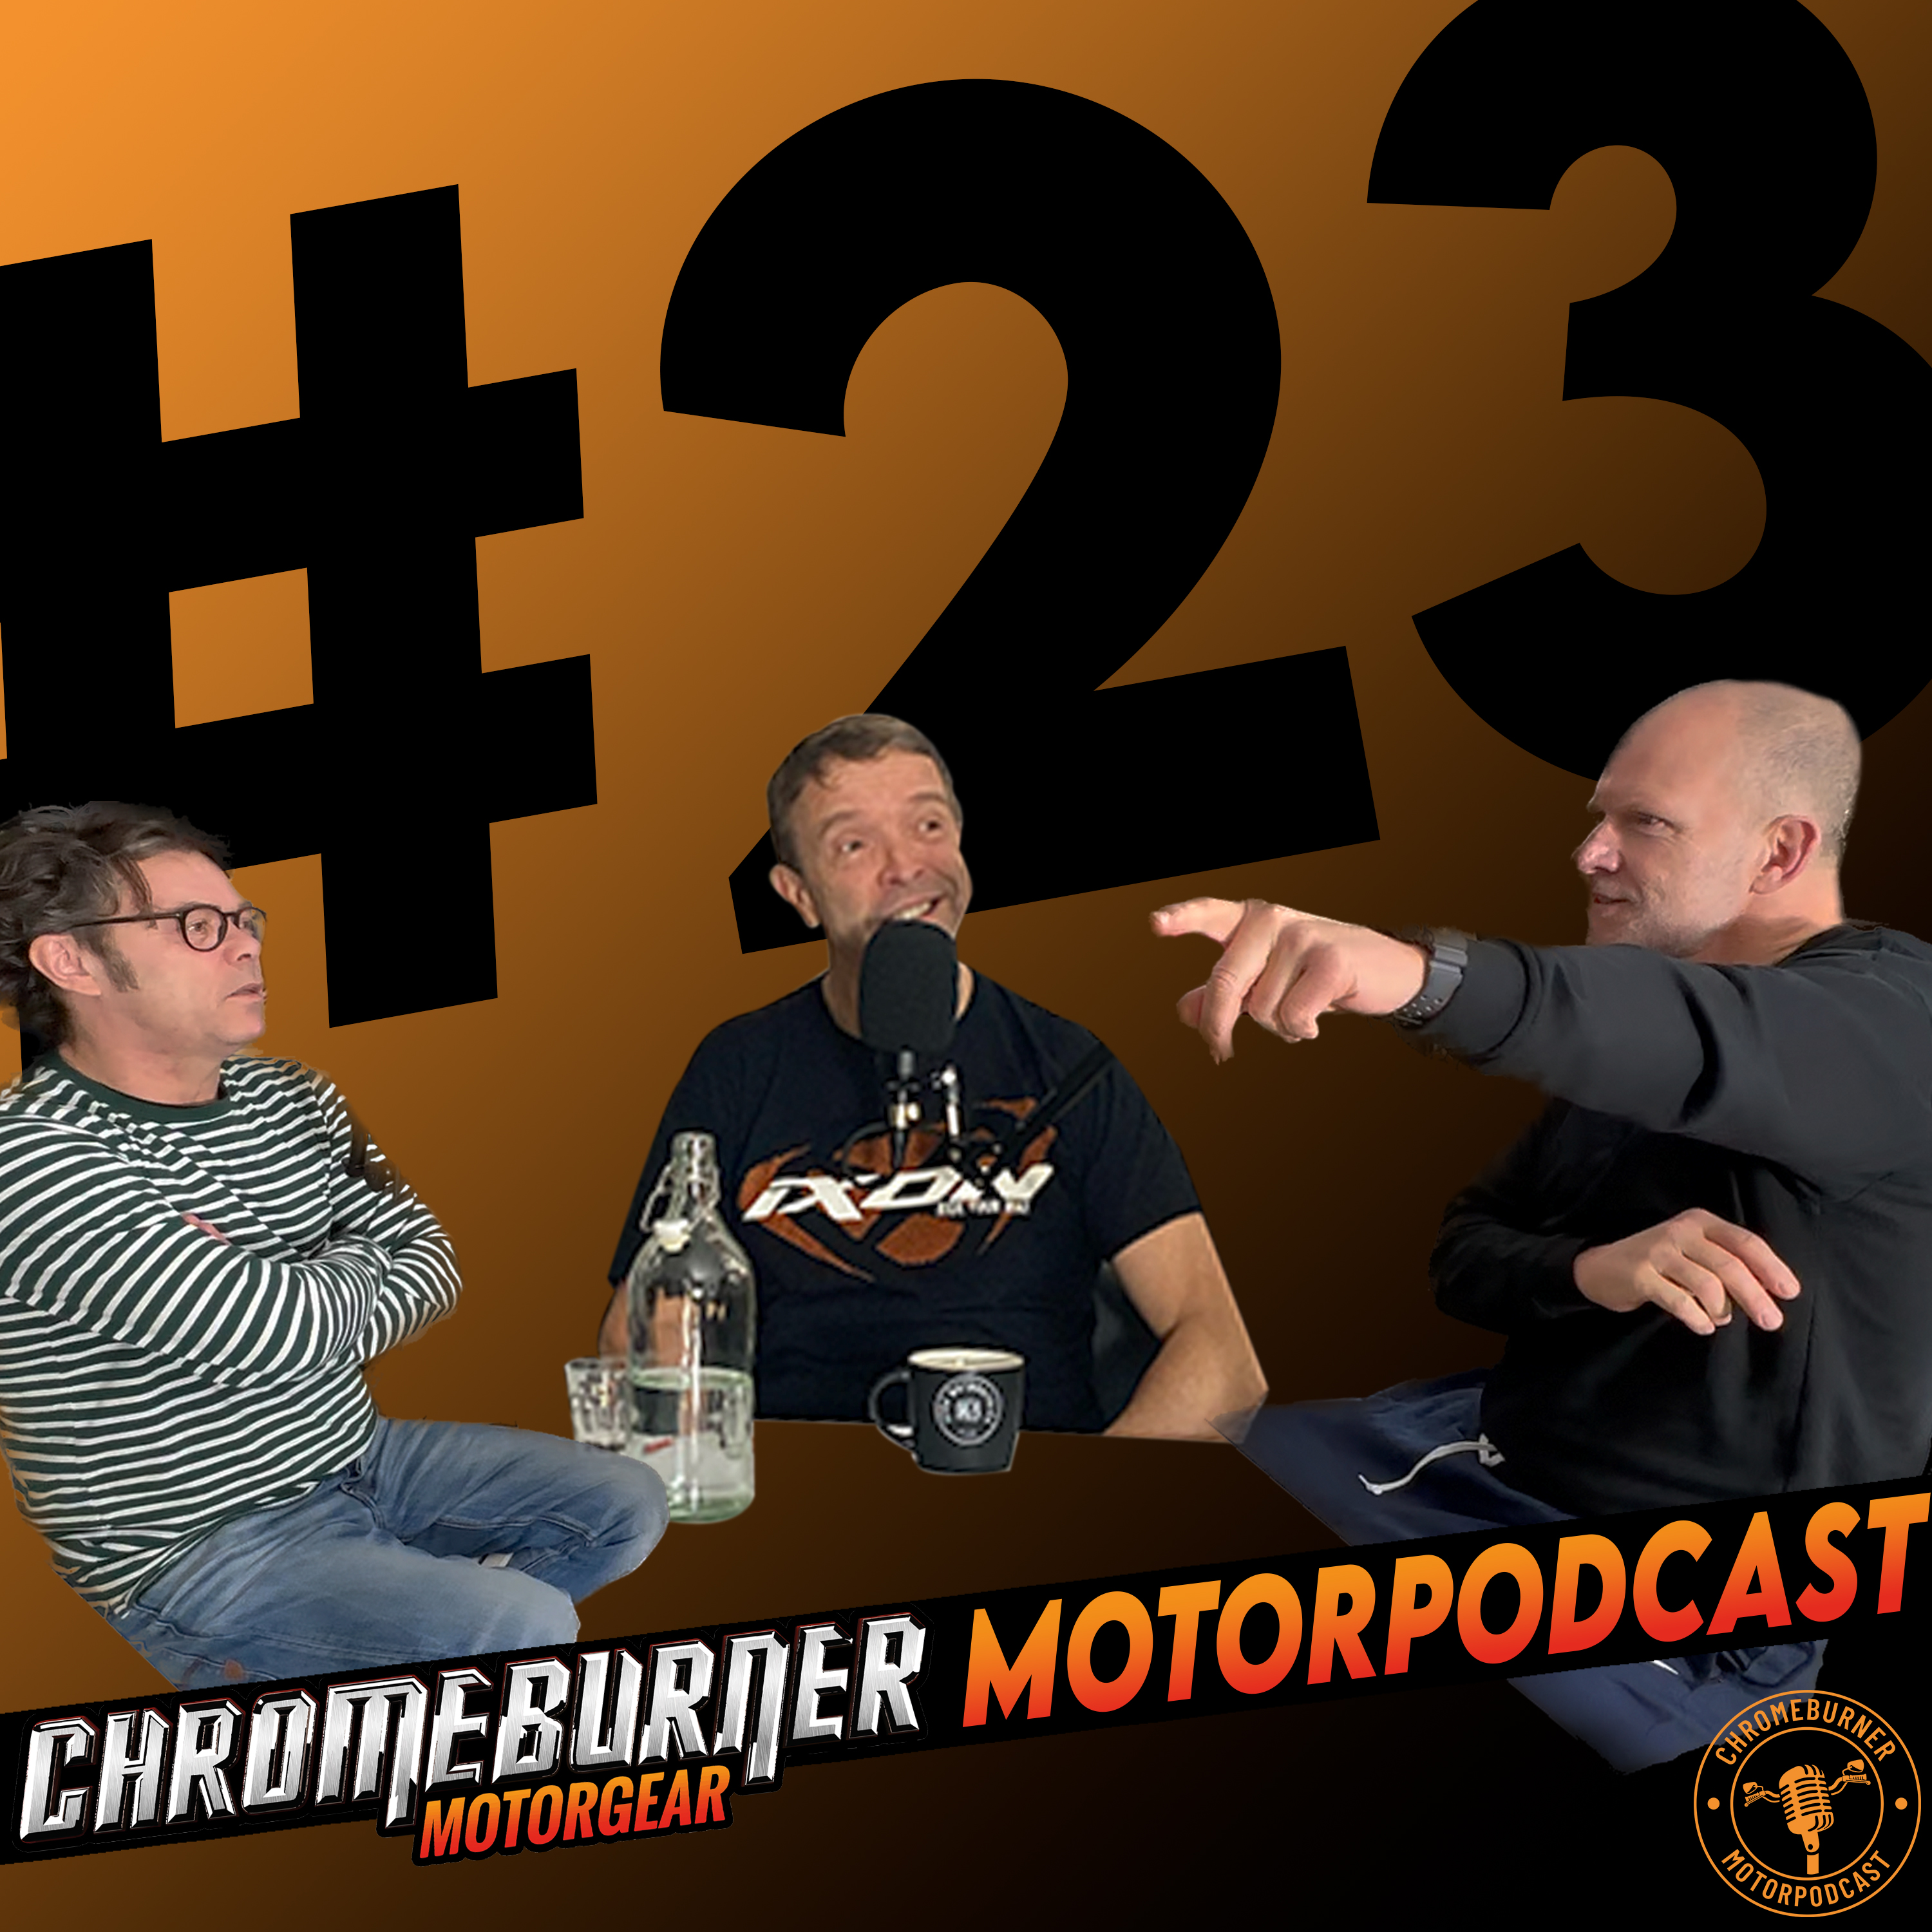 ChromeBurner Motorpodcast #23: Maxim Hartman: Gezeik aan de dijk, Noord-Ierland, Maxims motorgevoel!